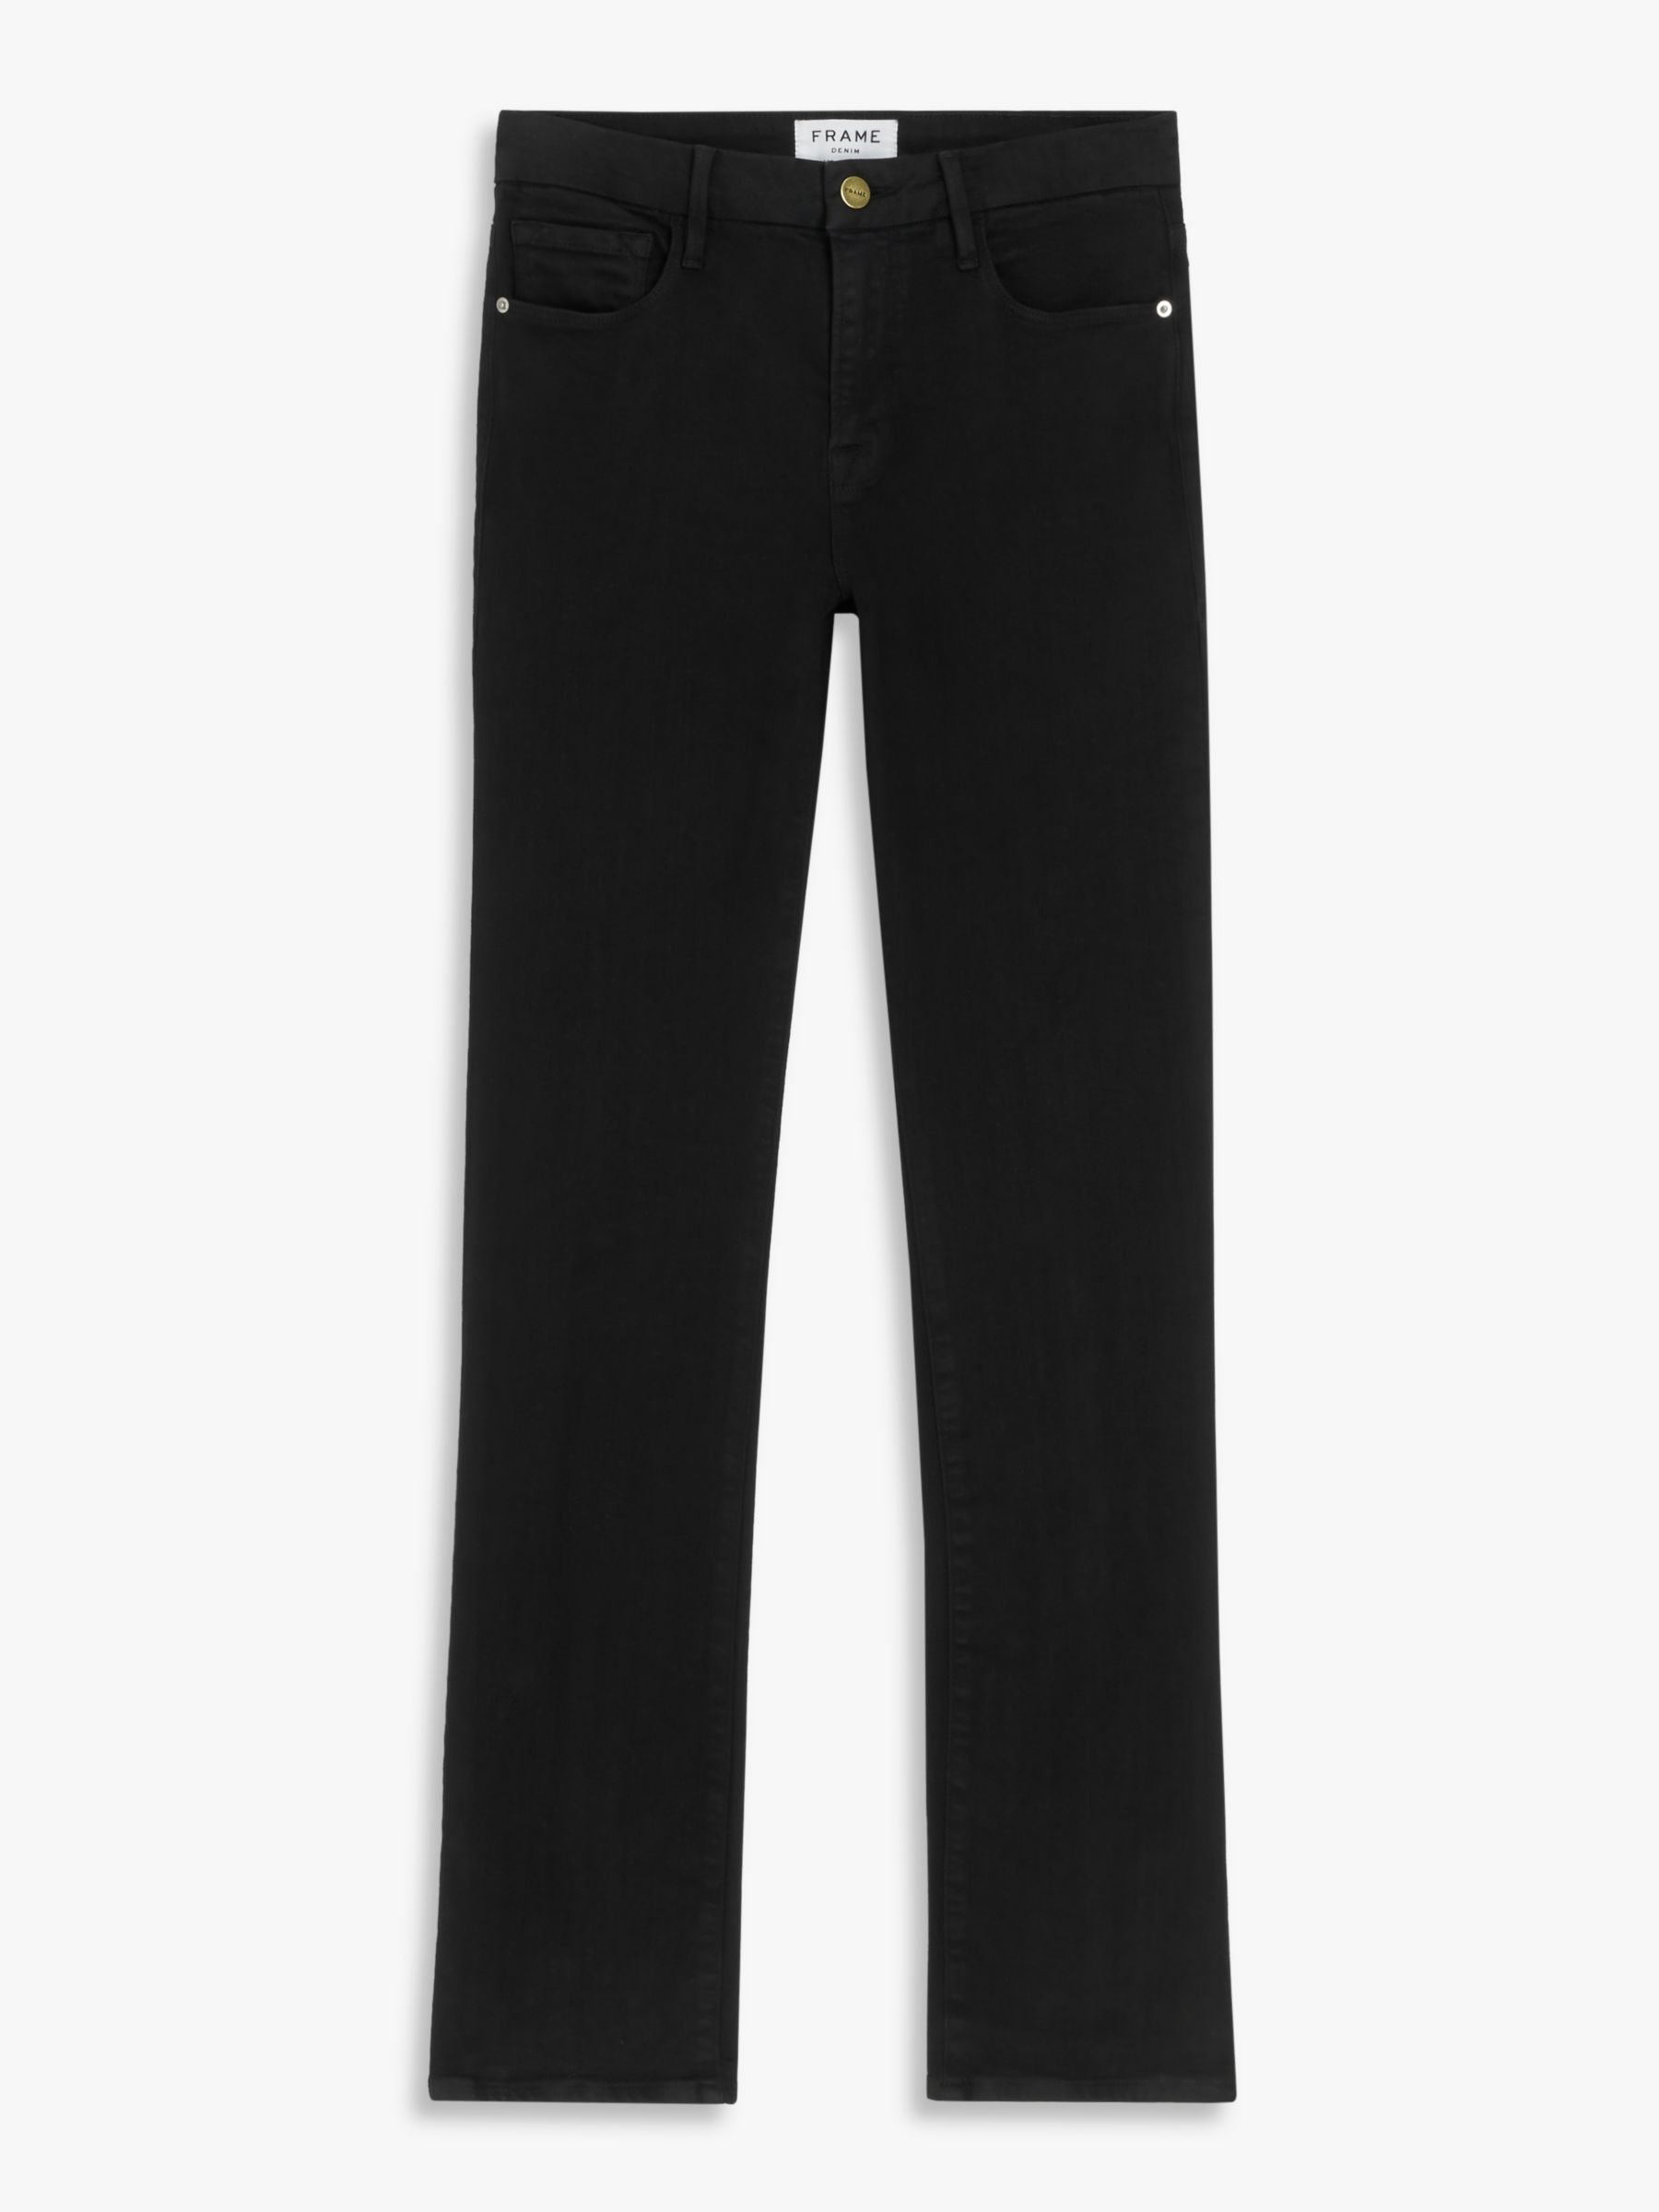 FRAME Le Mini Bootcut Jeans, Black, 24